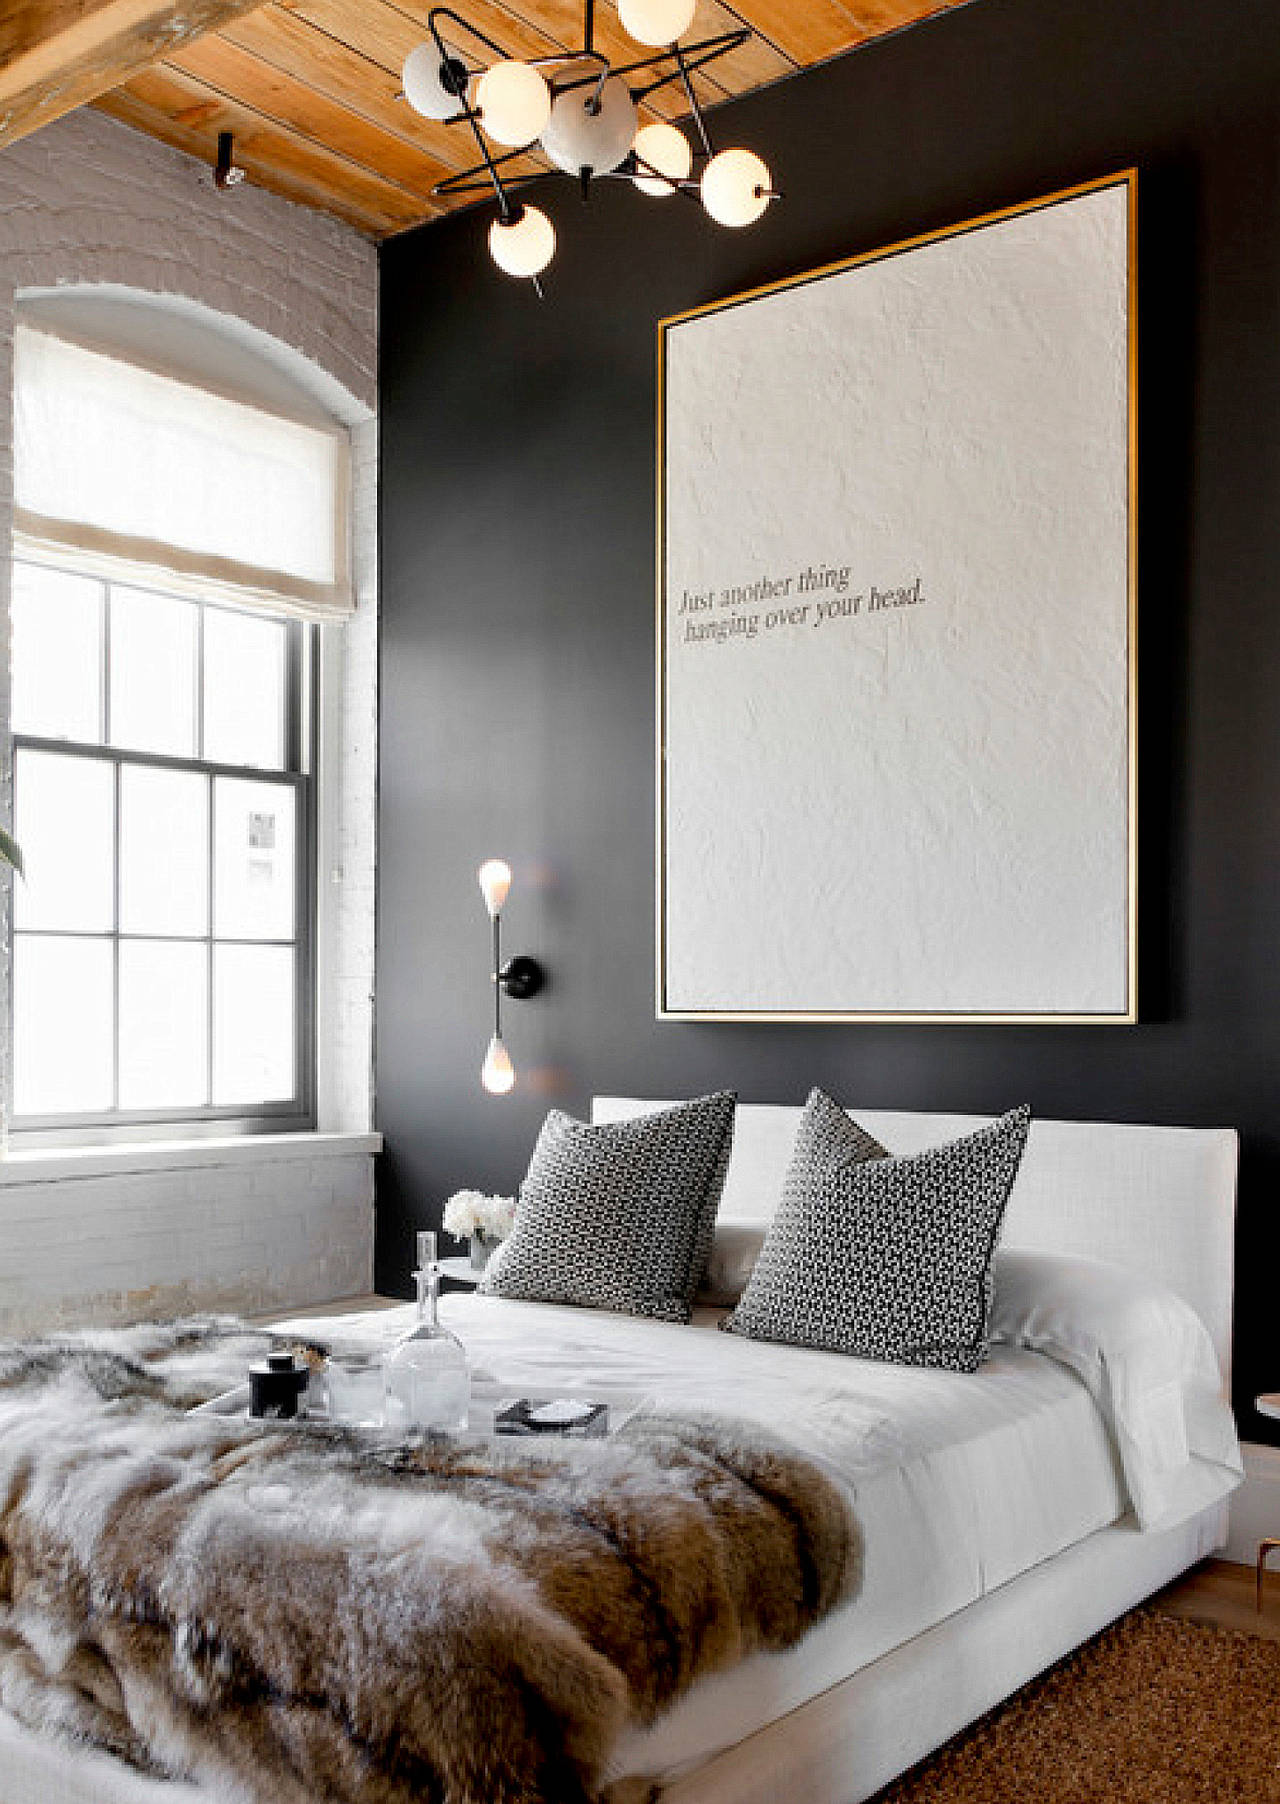 Design Inspiration For a Master Bedroom Decor